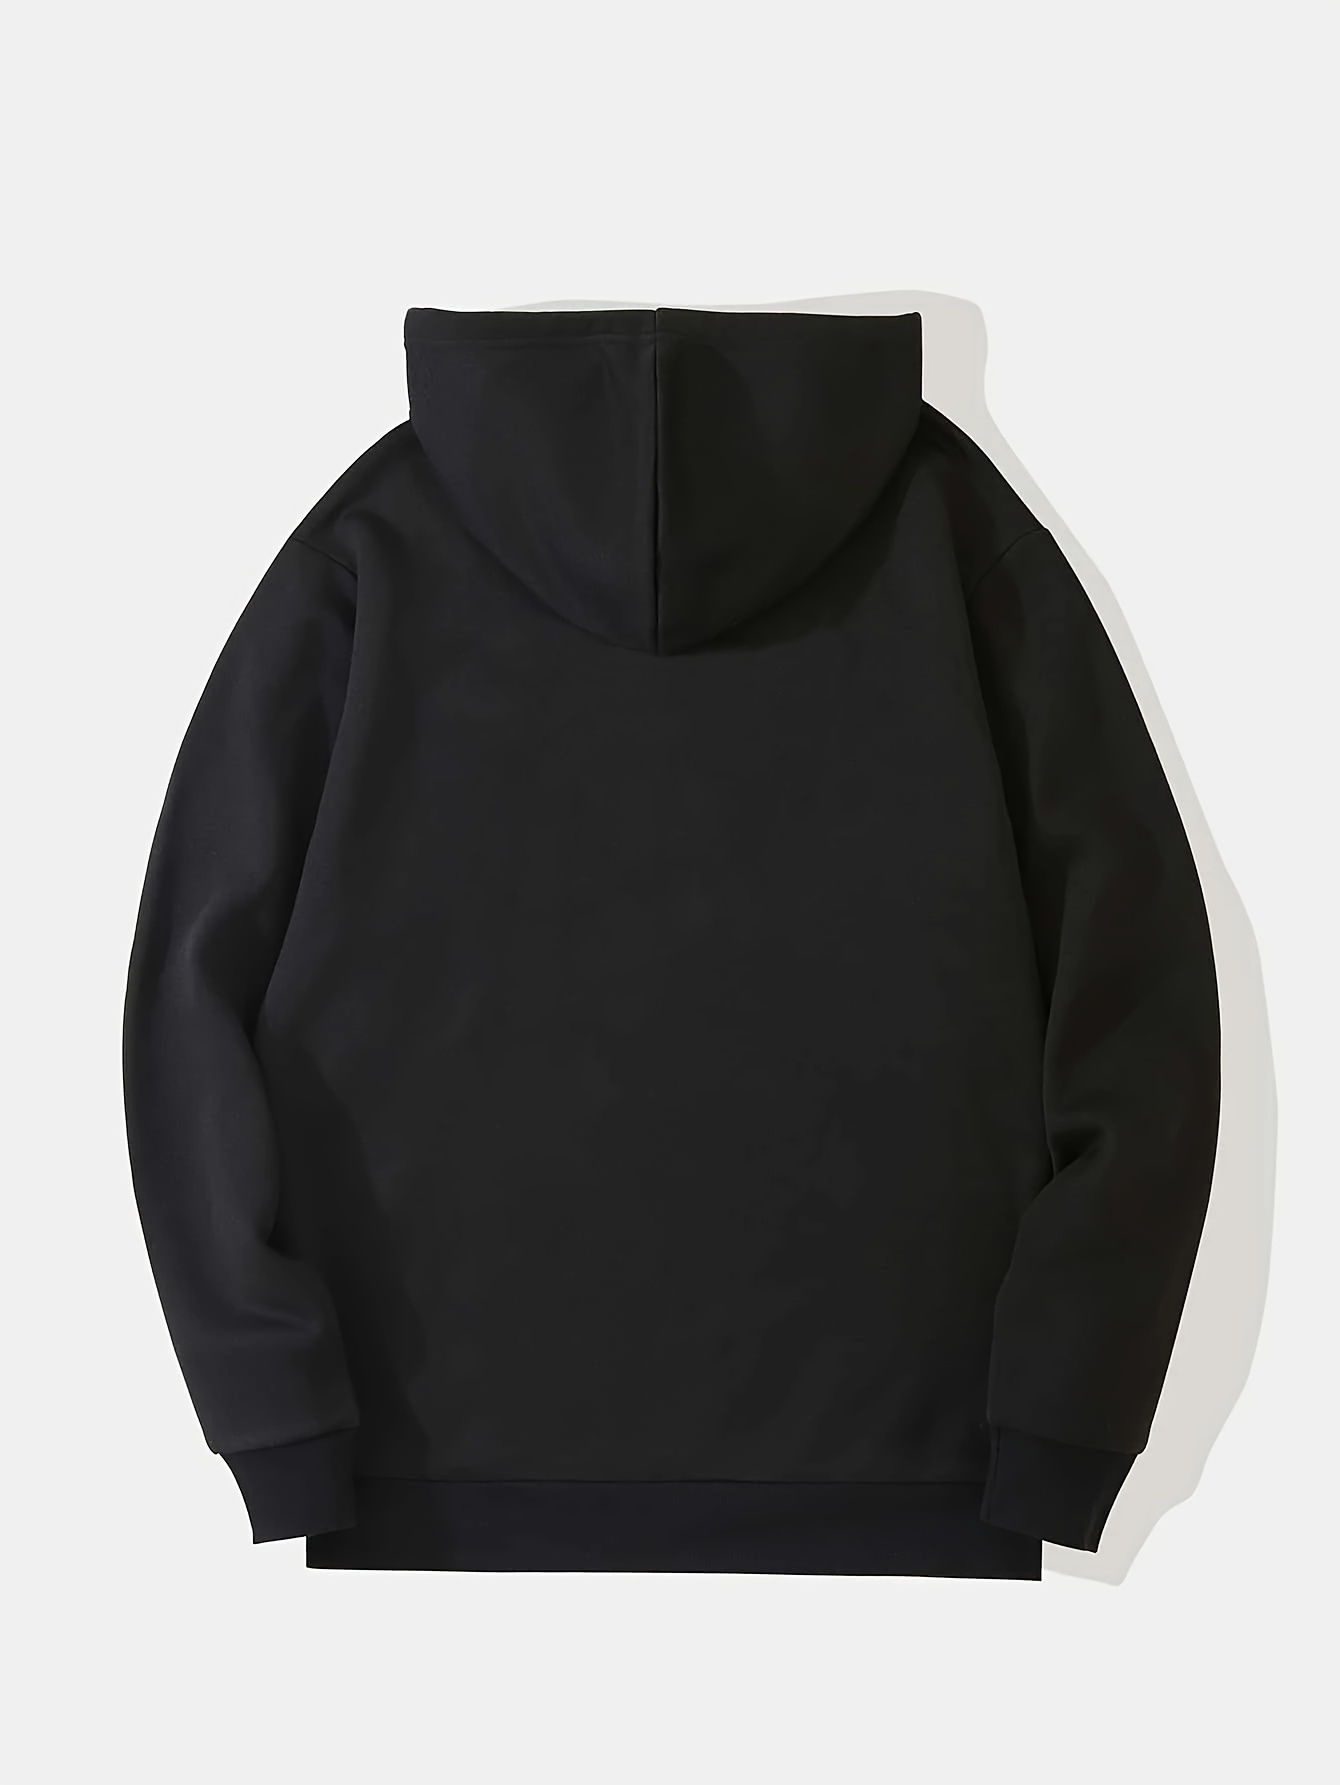 Graphics  College hoodies, Hoodies, Hoodie outfit casual